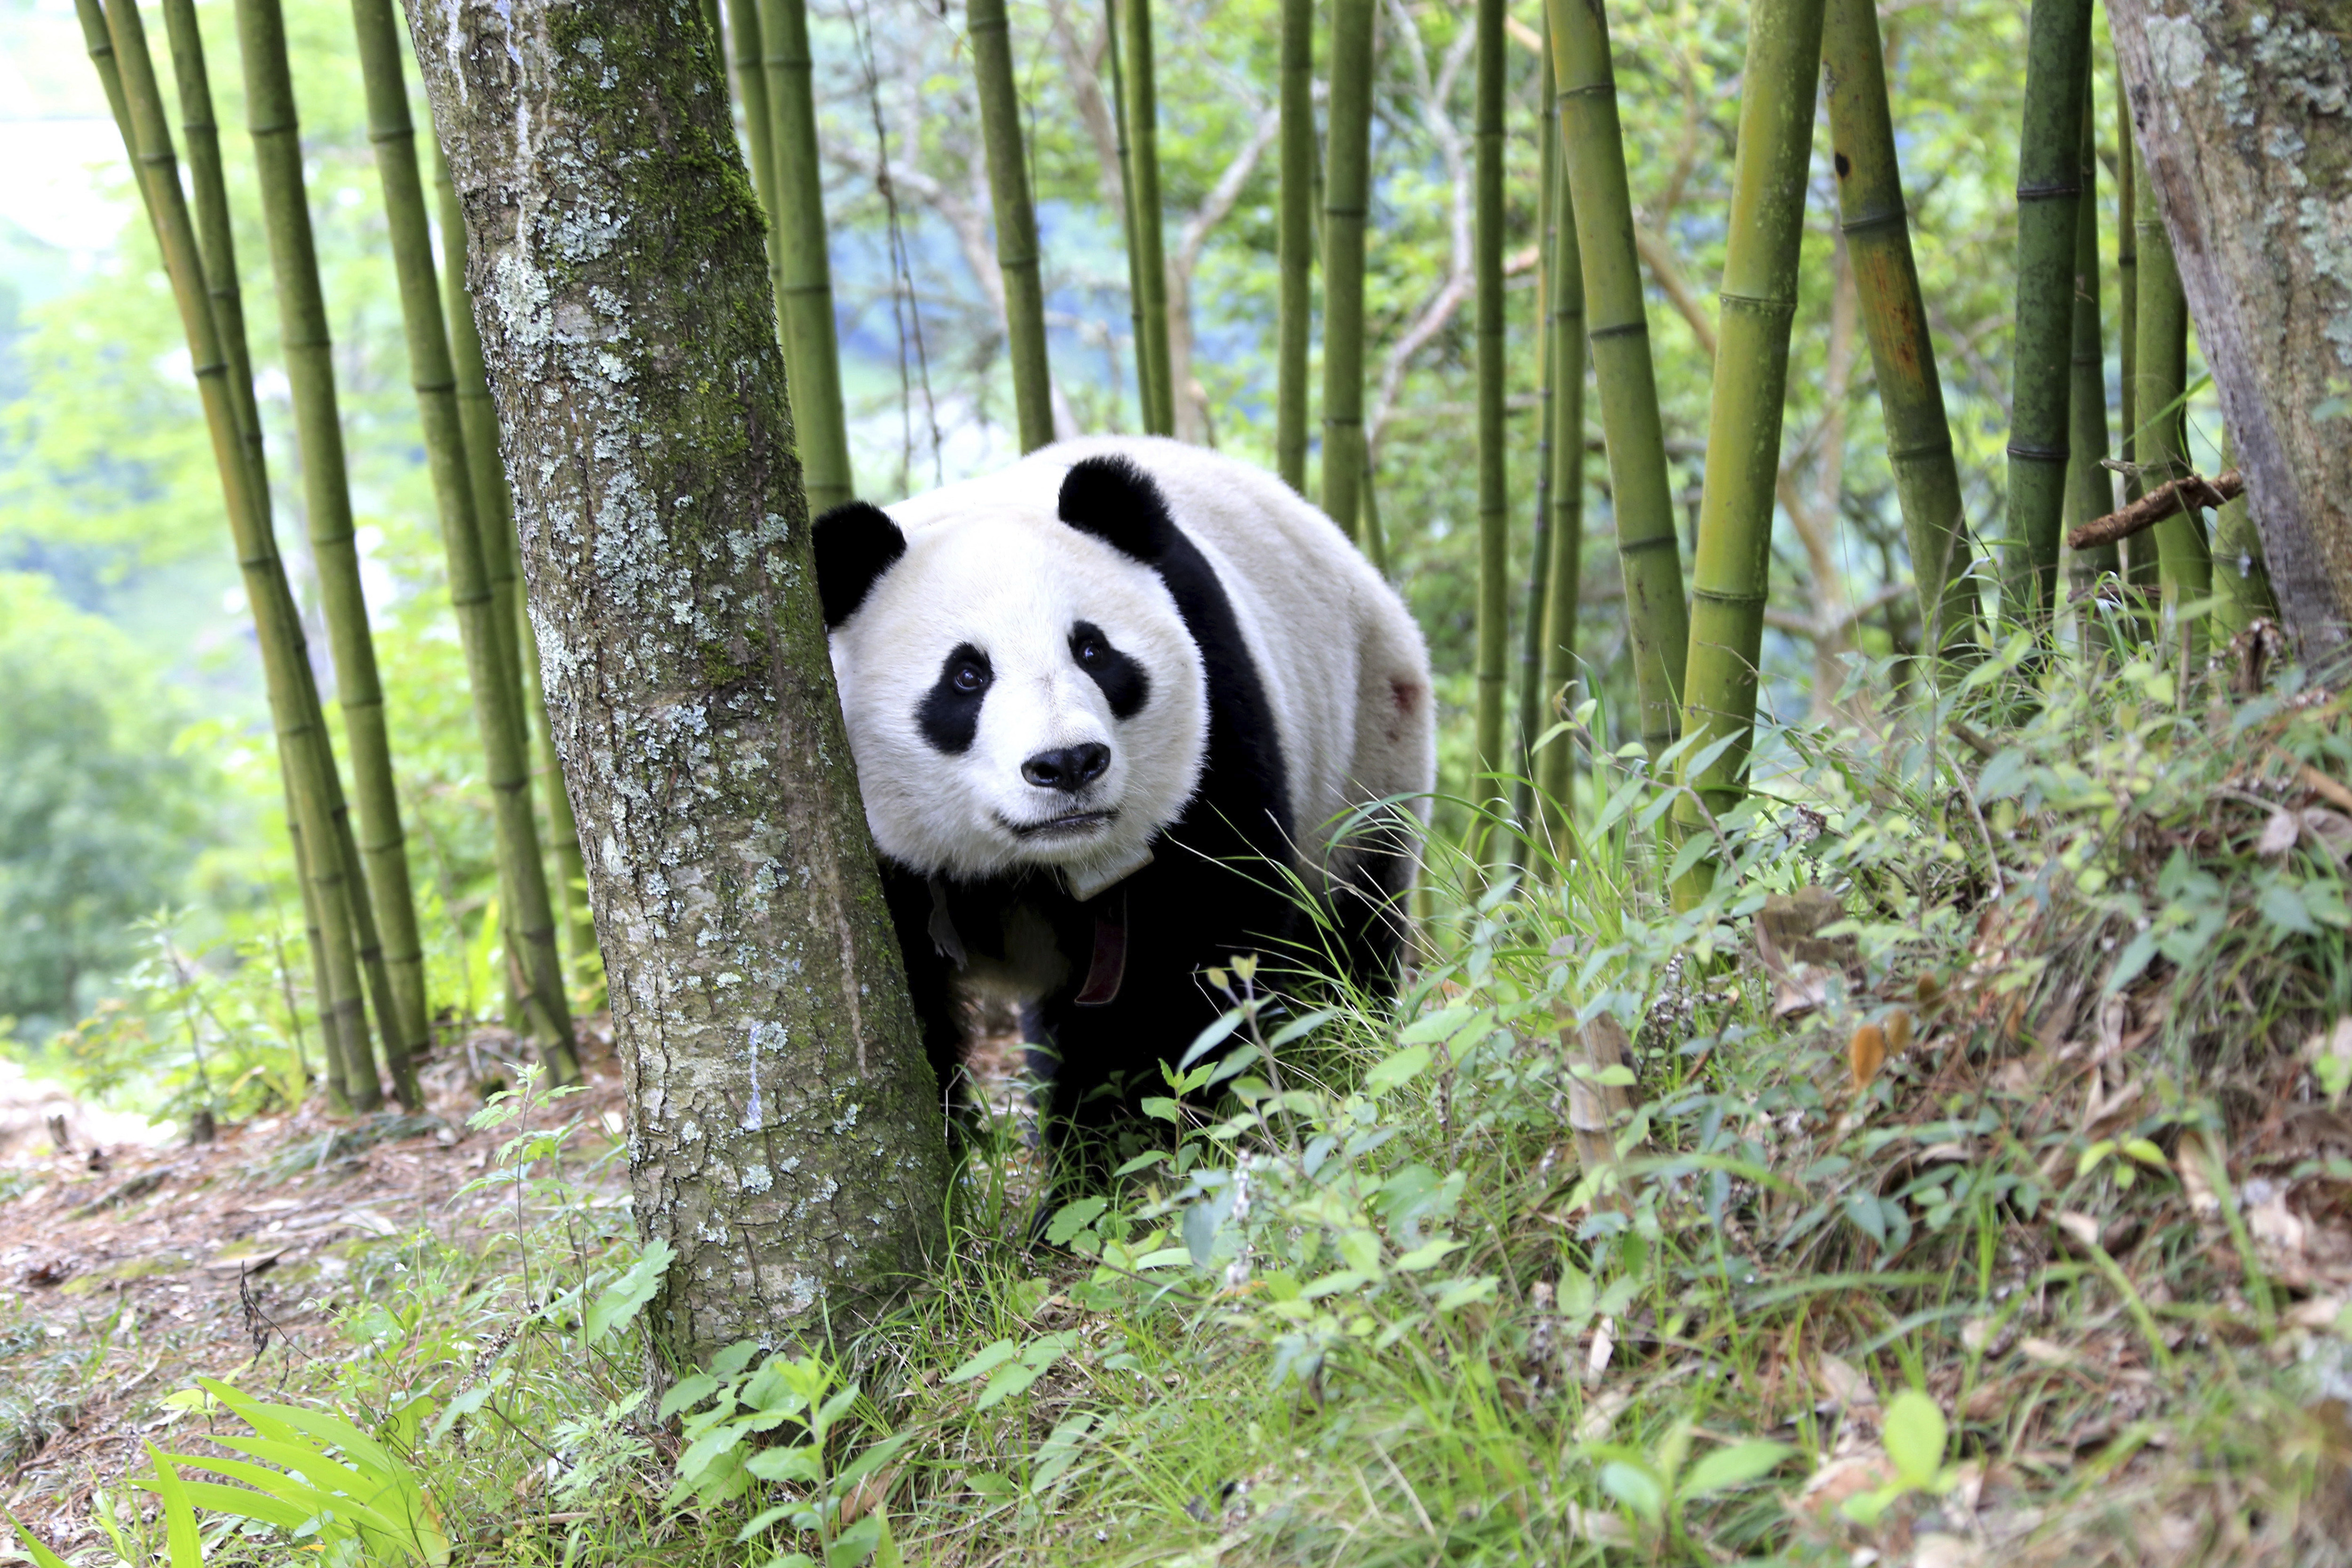 panda-takes-excursion-into-town-in-southwestern-china-the-daily-courier-prescott-az